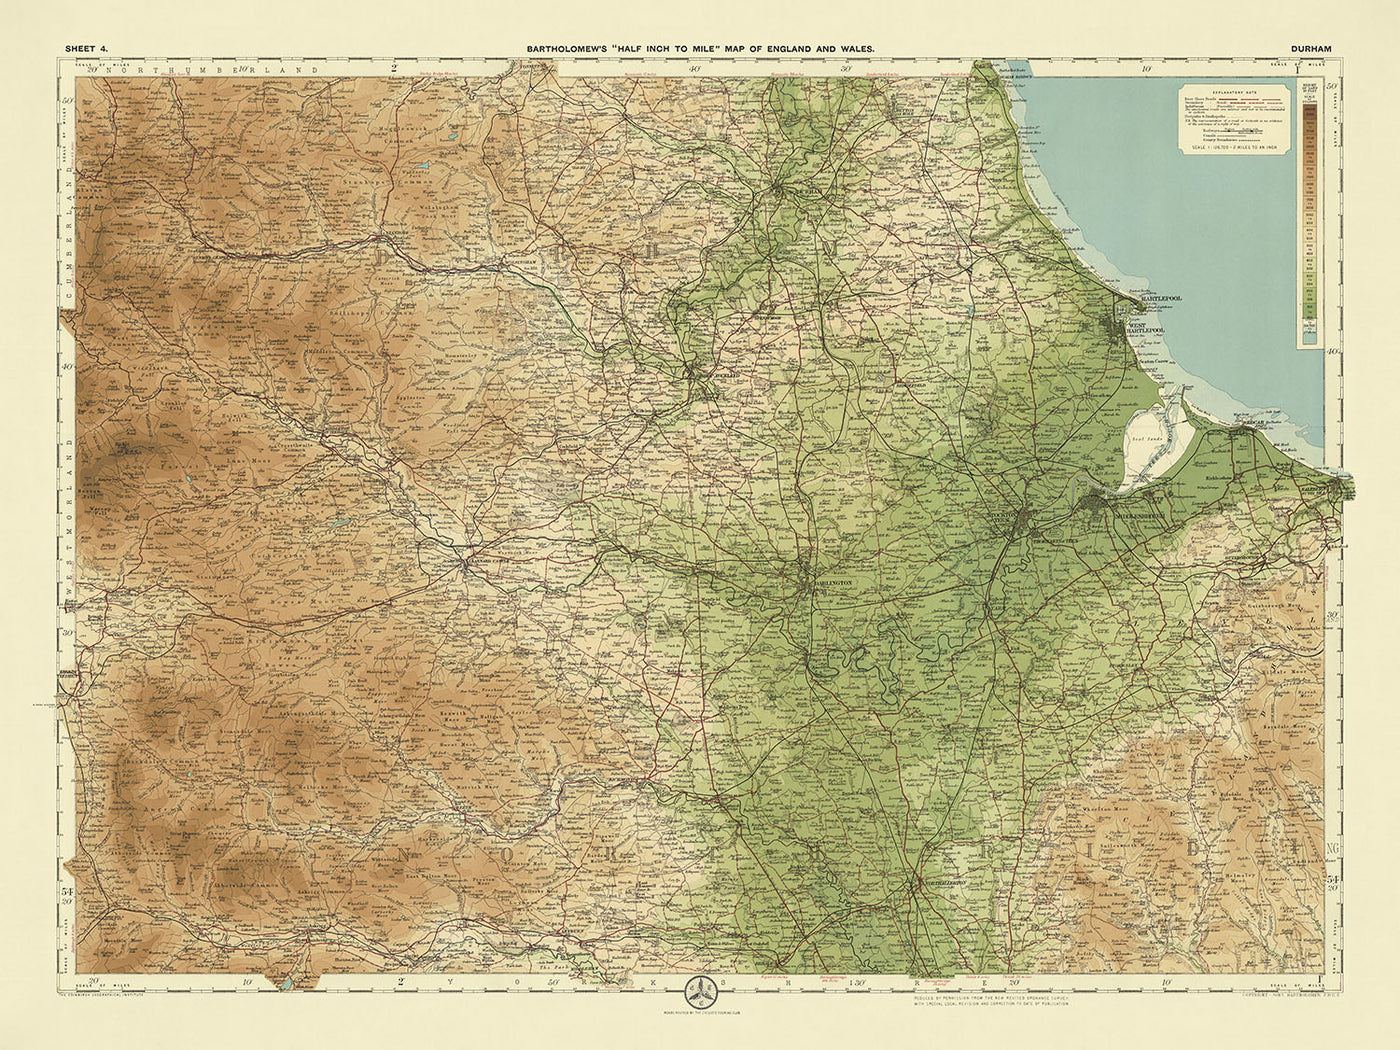 Old OS Map of County Durham by Bartholomew, 1901: Middlesbrough, River Tees, Pennine Hills, Darlington, Hartlepool